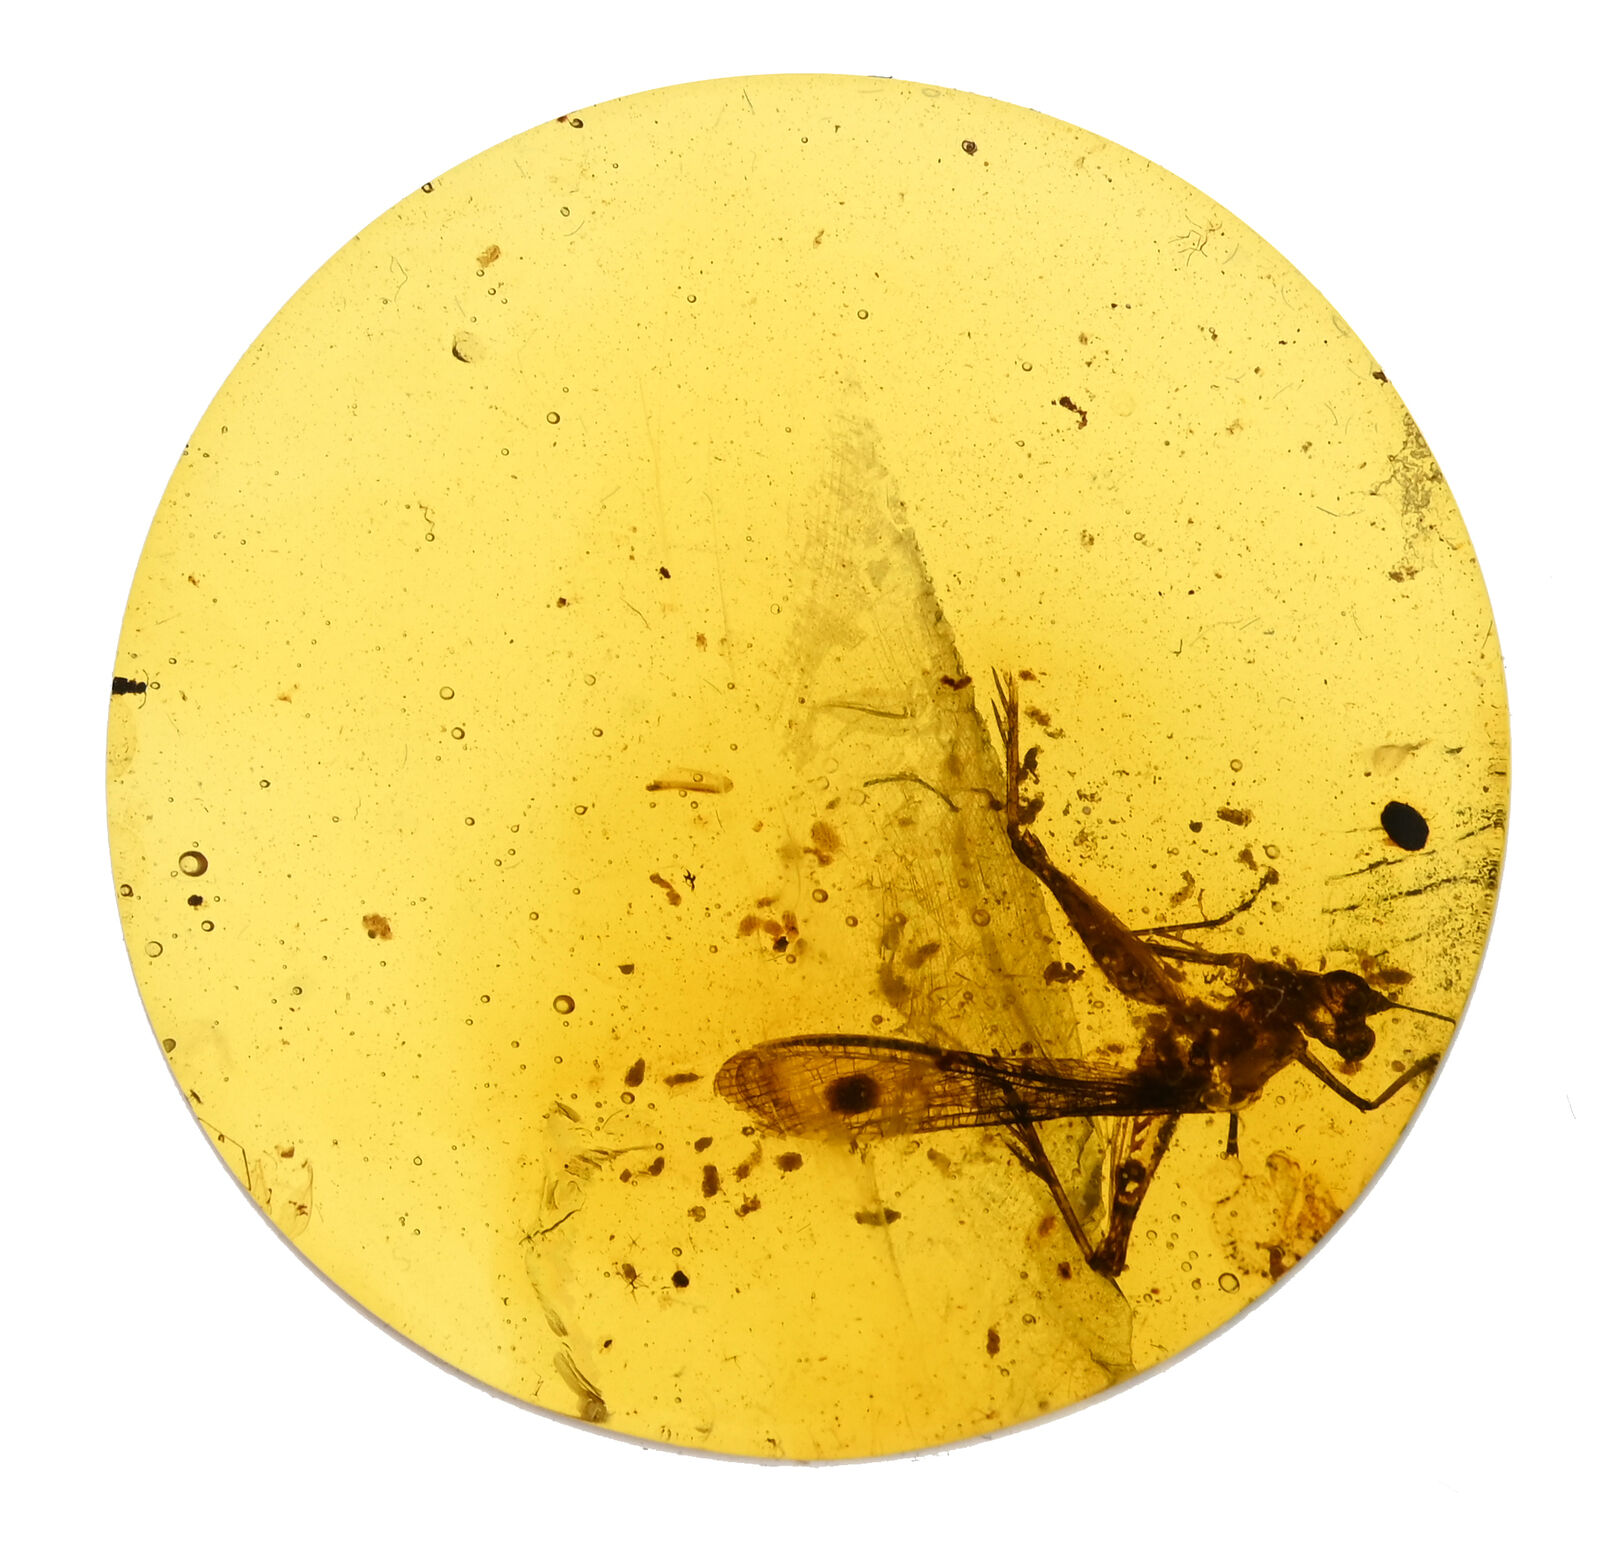 Rare Extinct Elcanidae (Grasshopper), Fossil inclusion in Burmese Amber